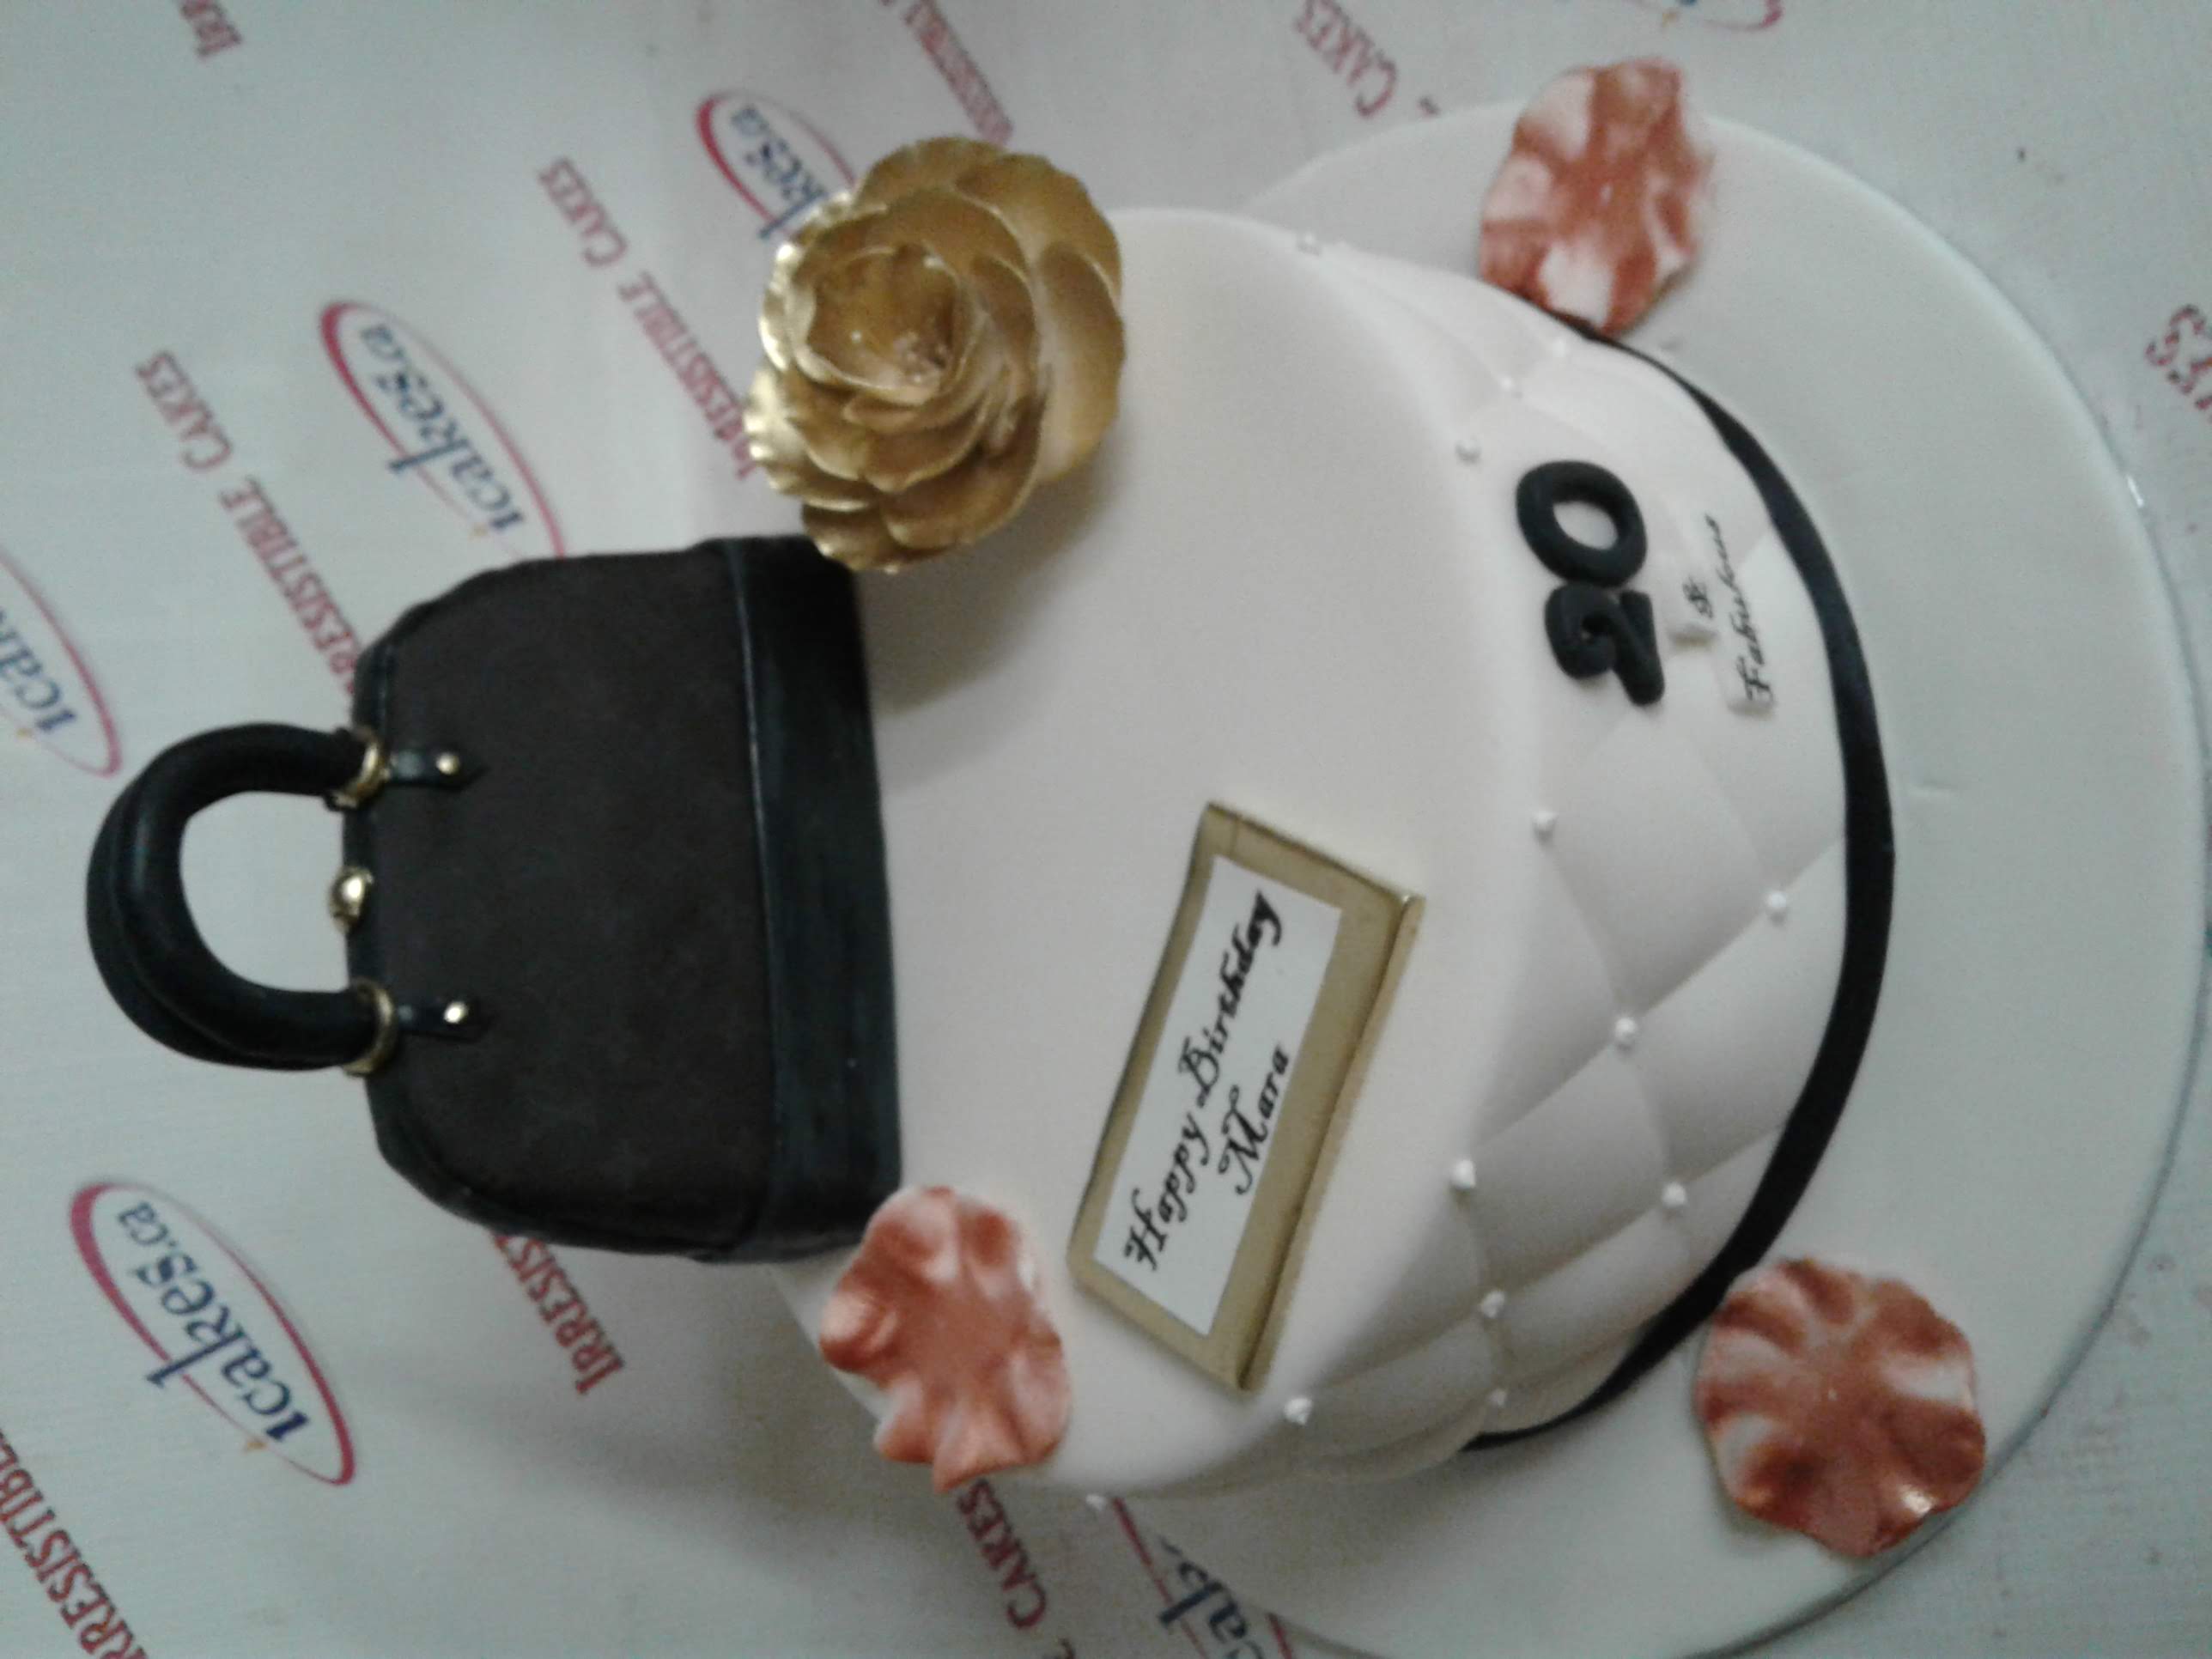 Custom purse cake - Picture of Larry's House of Cakes, Carbondale -  Tripadvisor